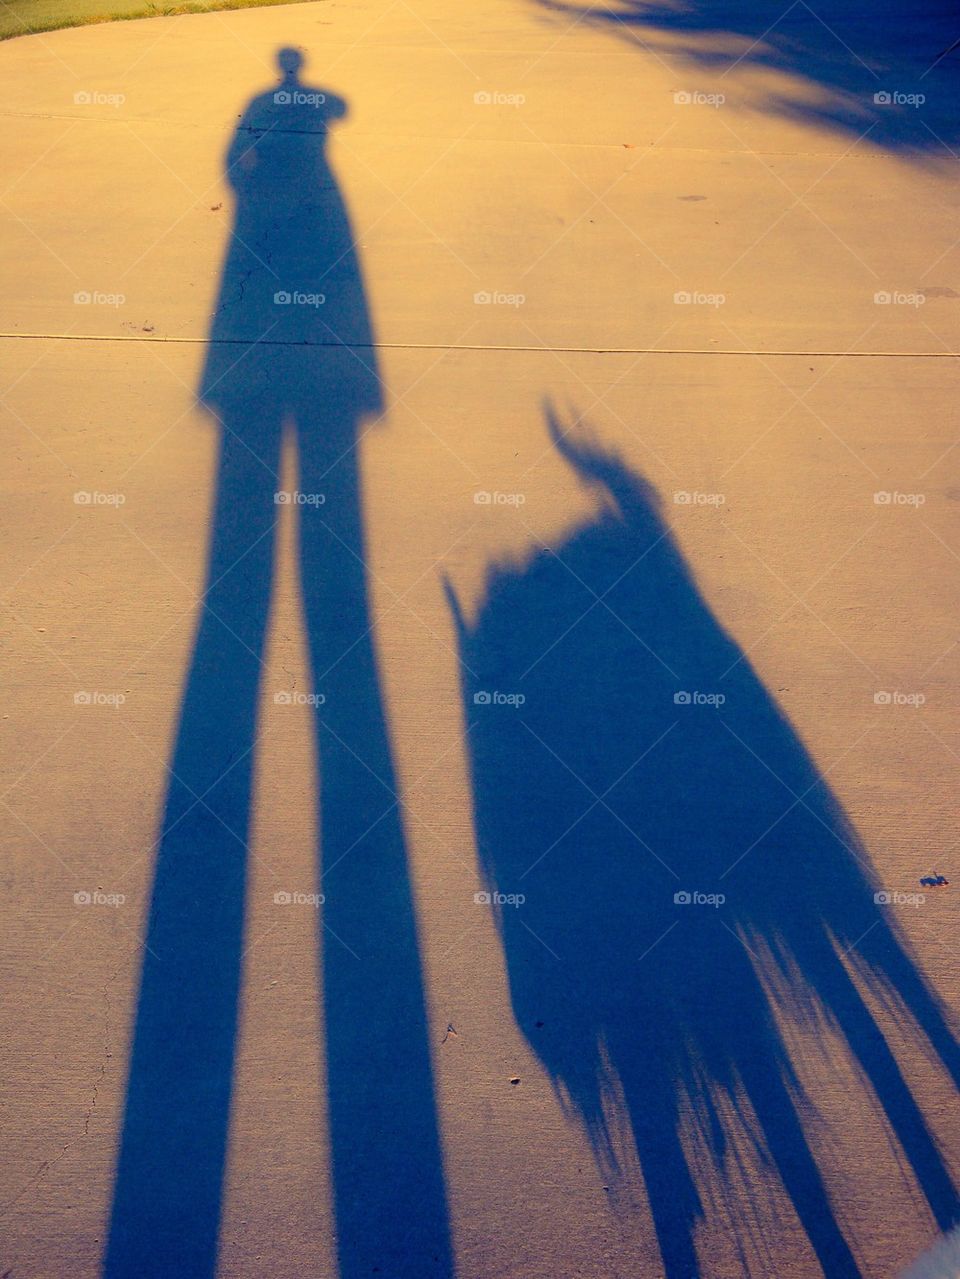 Me and my dog shadow